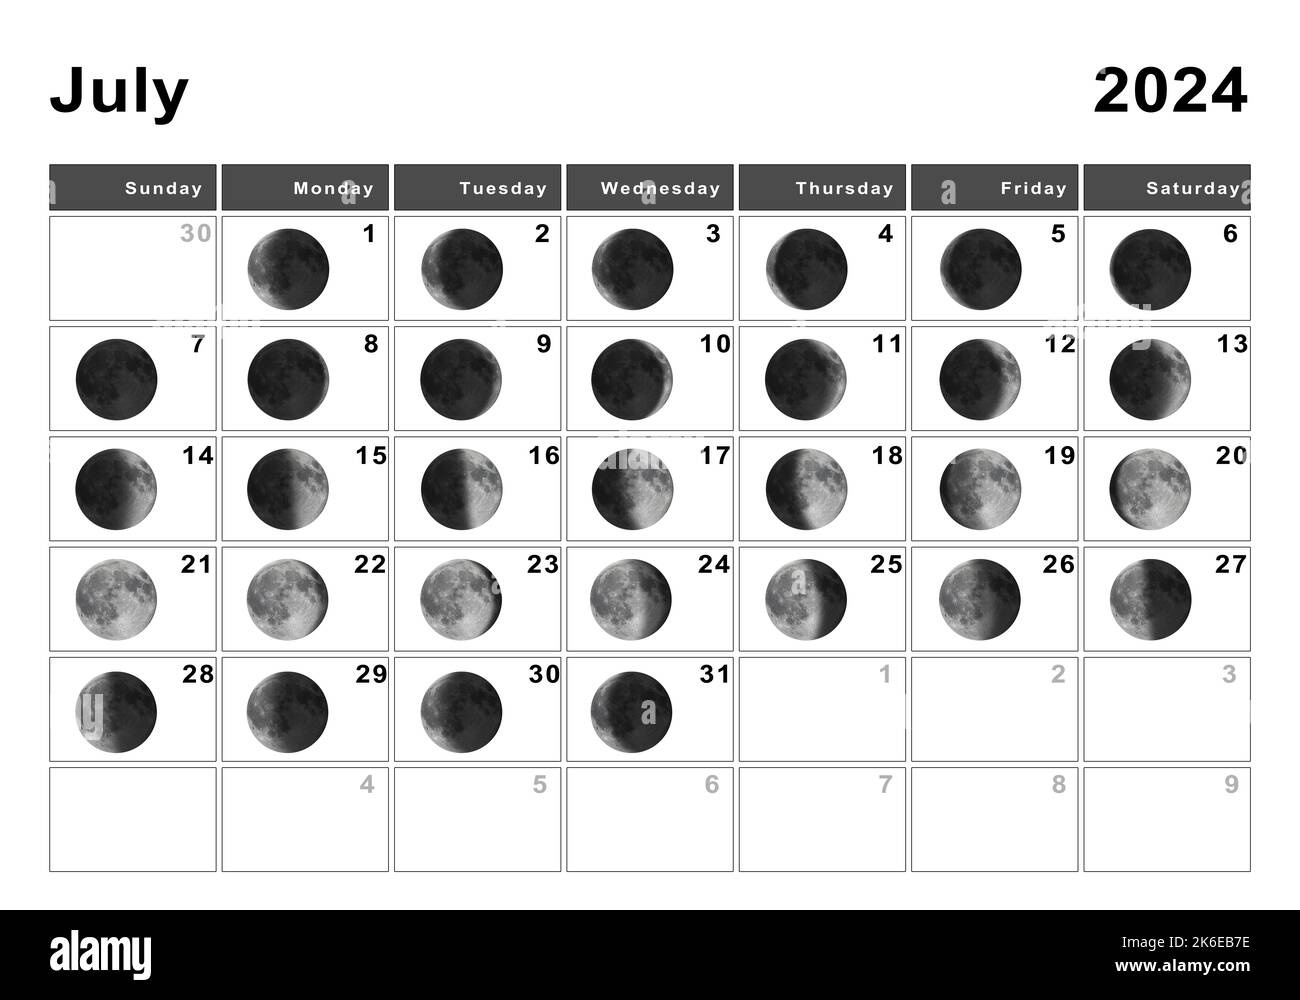 July 2024 Lunar Calendar, Moon Cycles, Moon Phases Stock Photo - Alamy in July 16 Lunar Calendar 2024